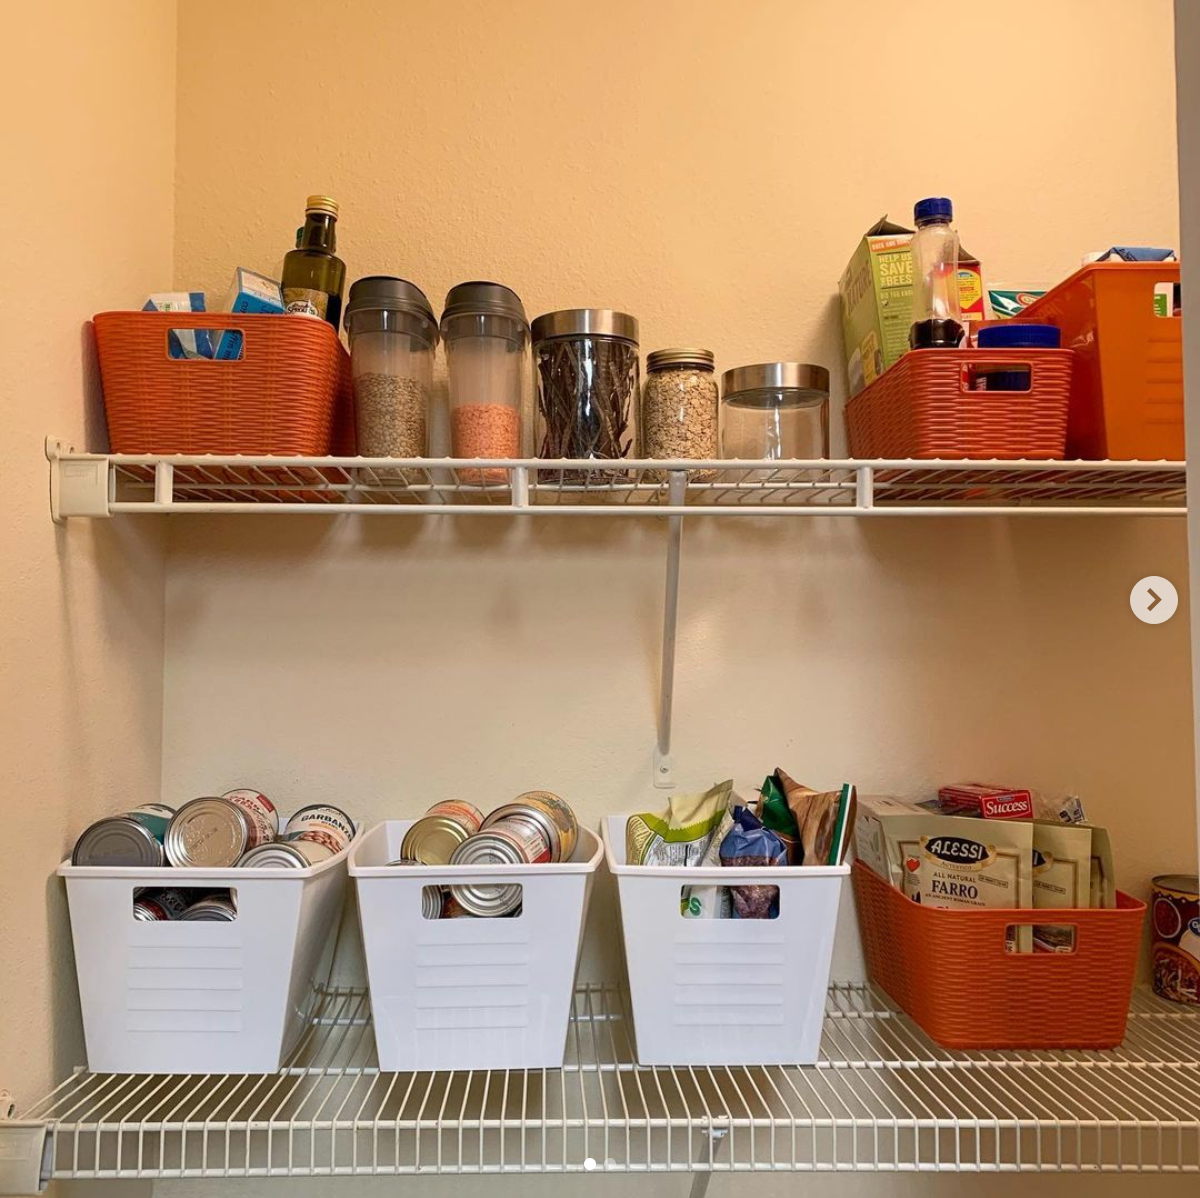 Pantry organized into bins and jars